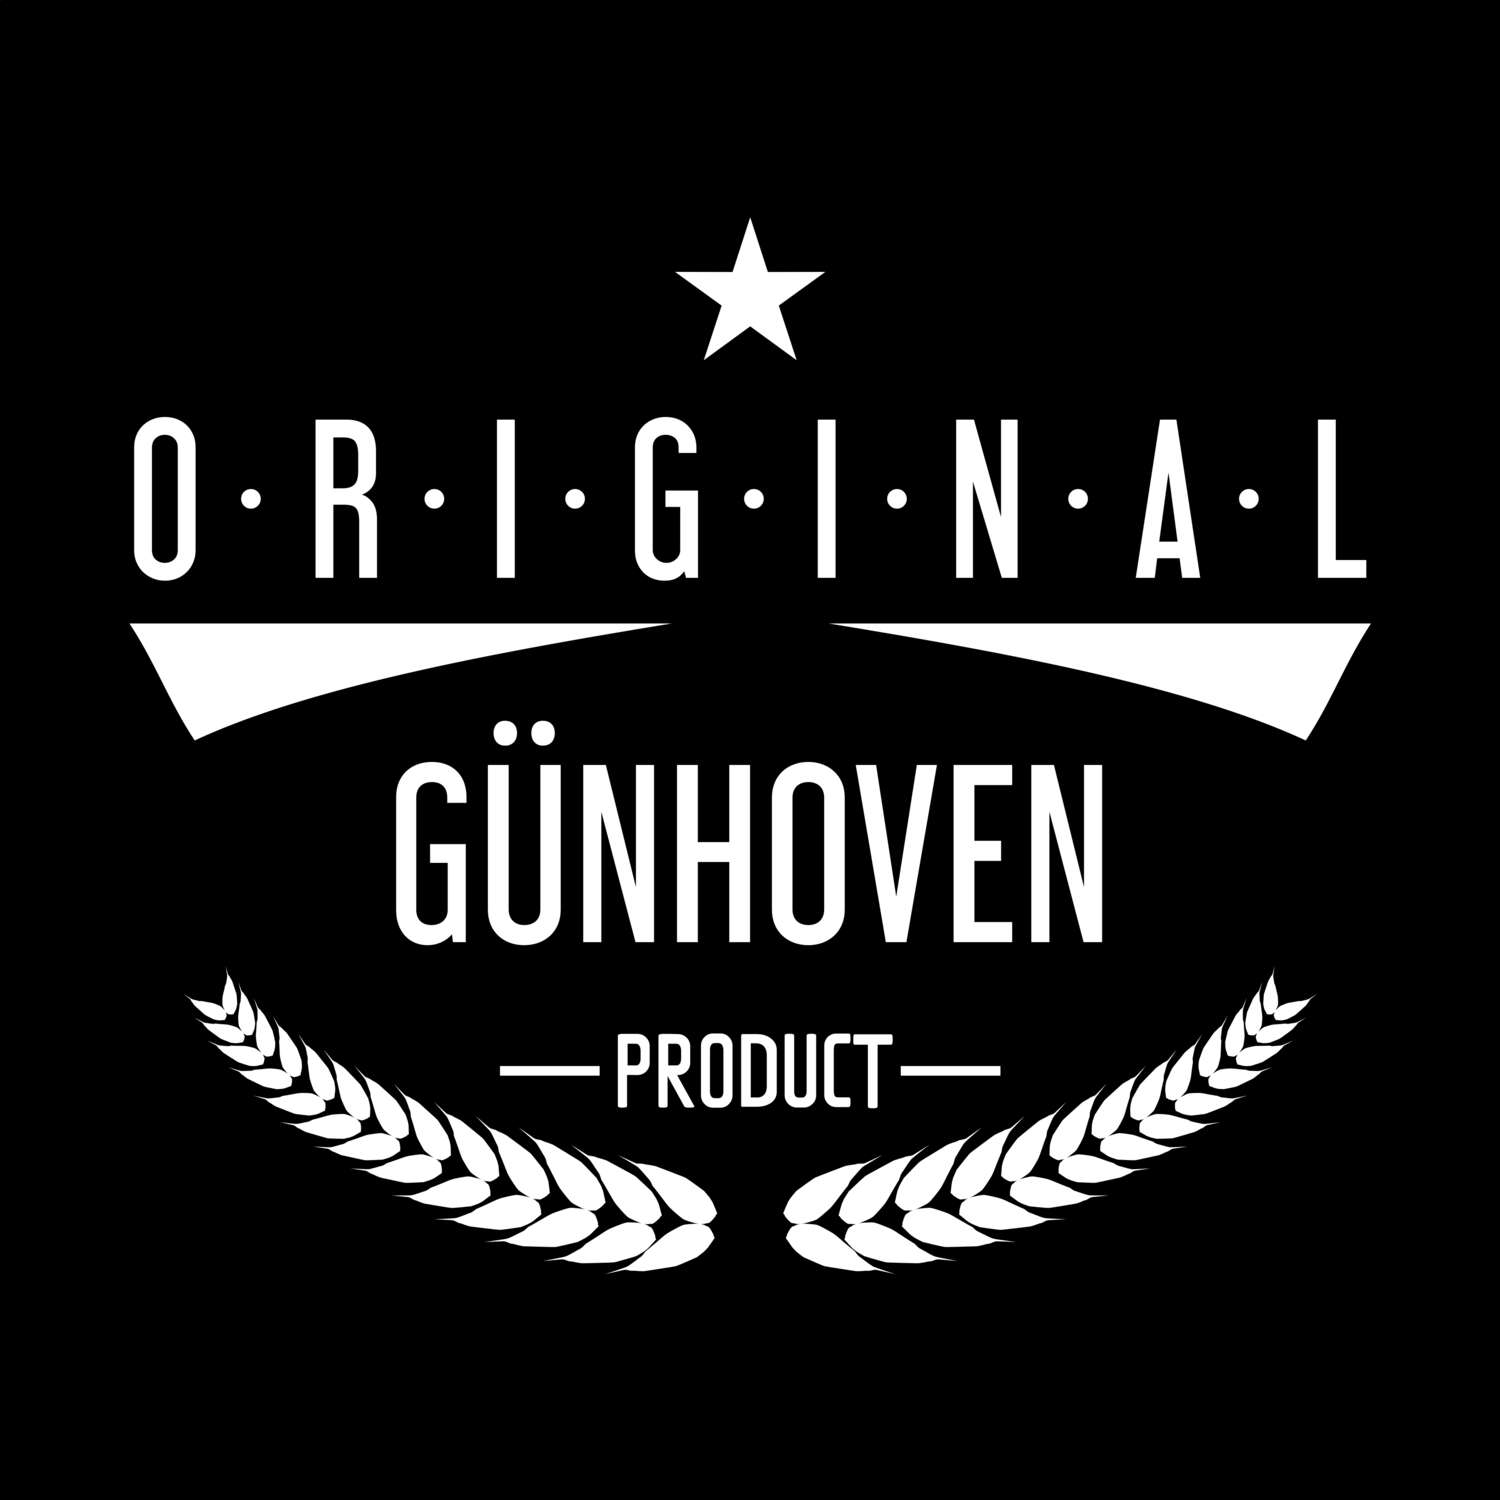 Günhoven T-Shirt »Original Product«